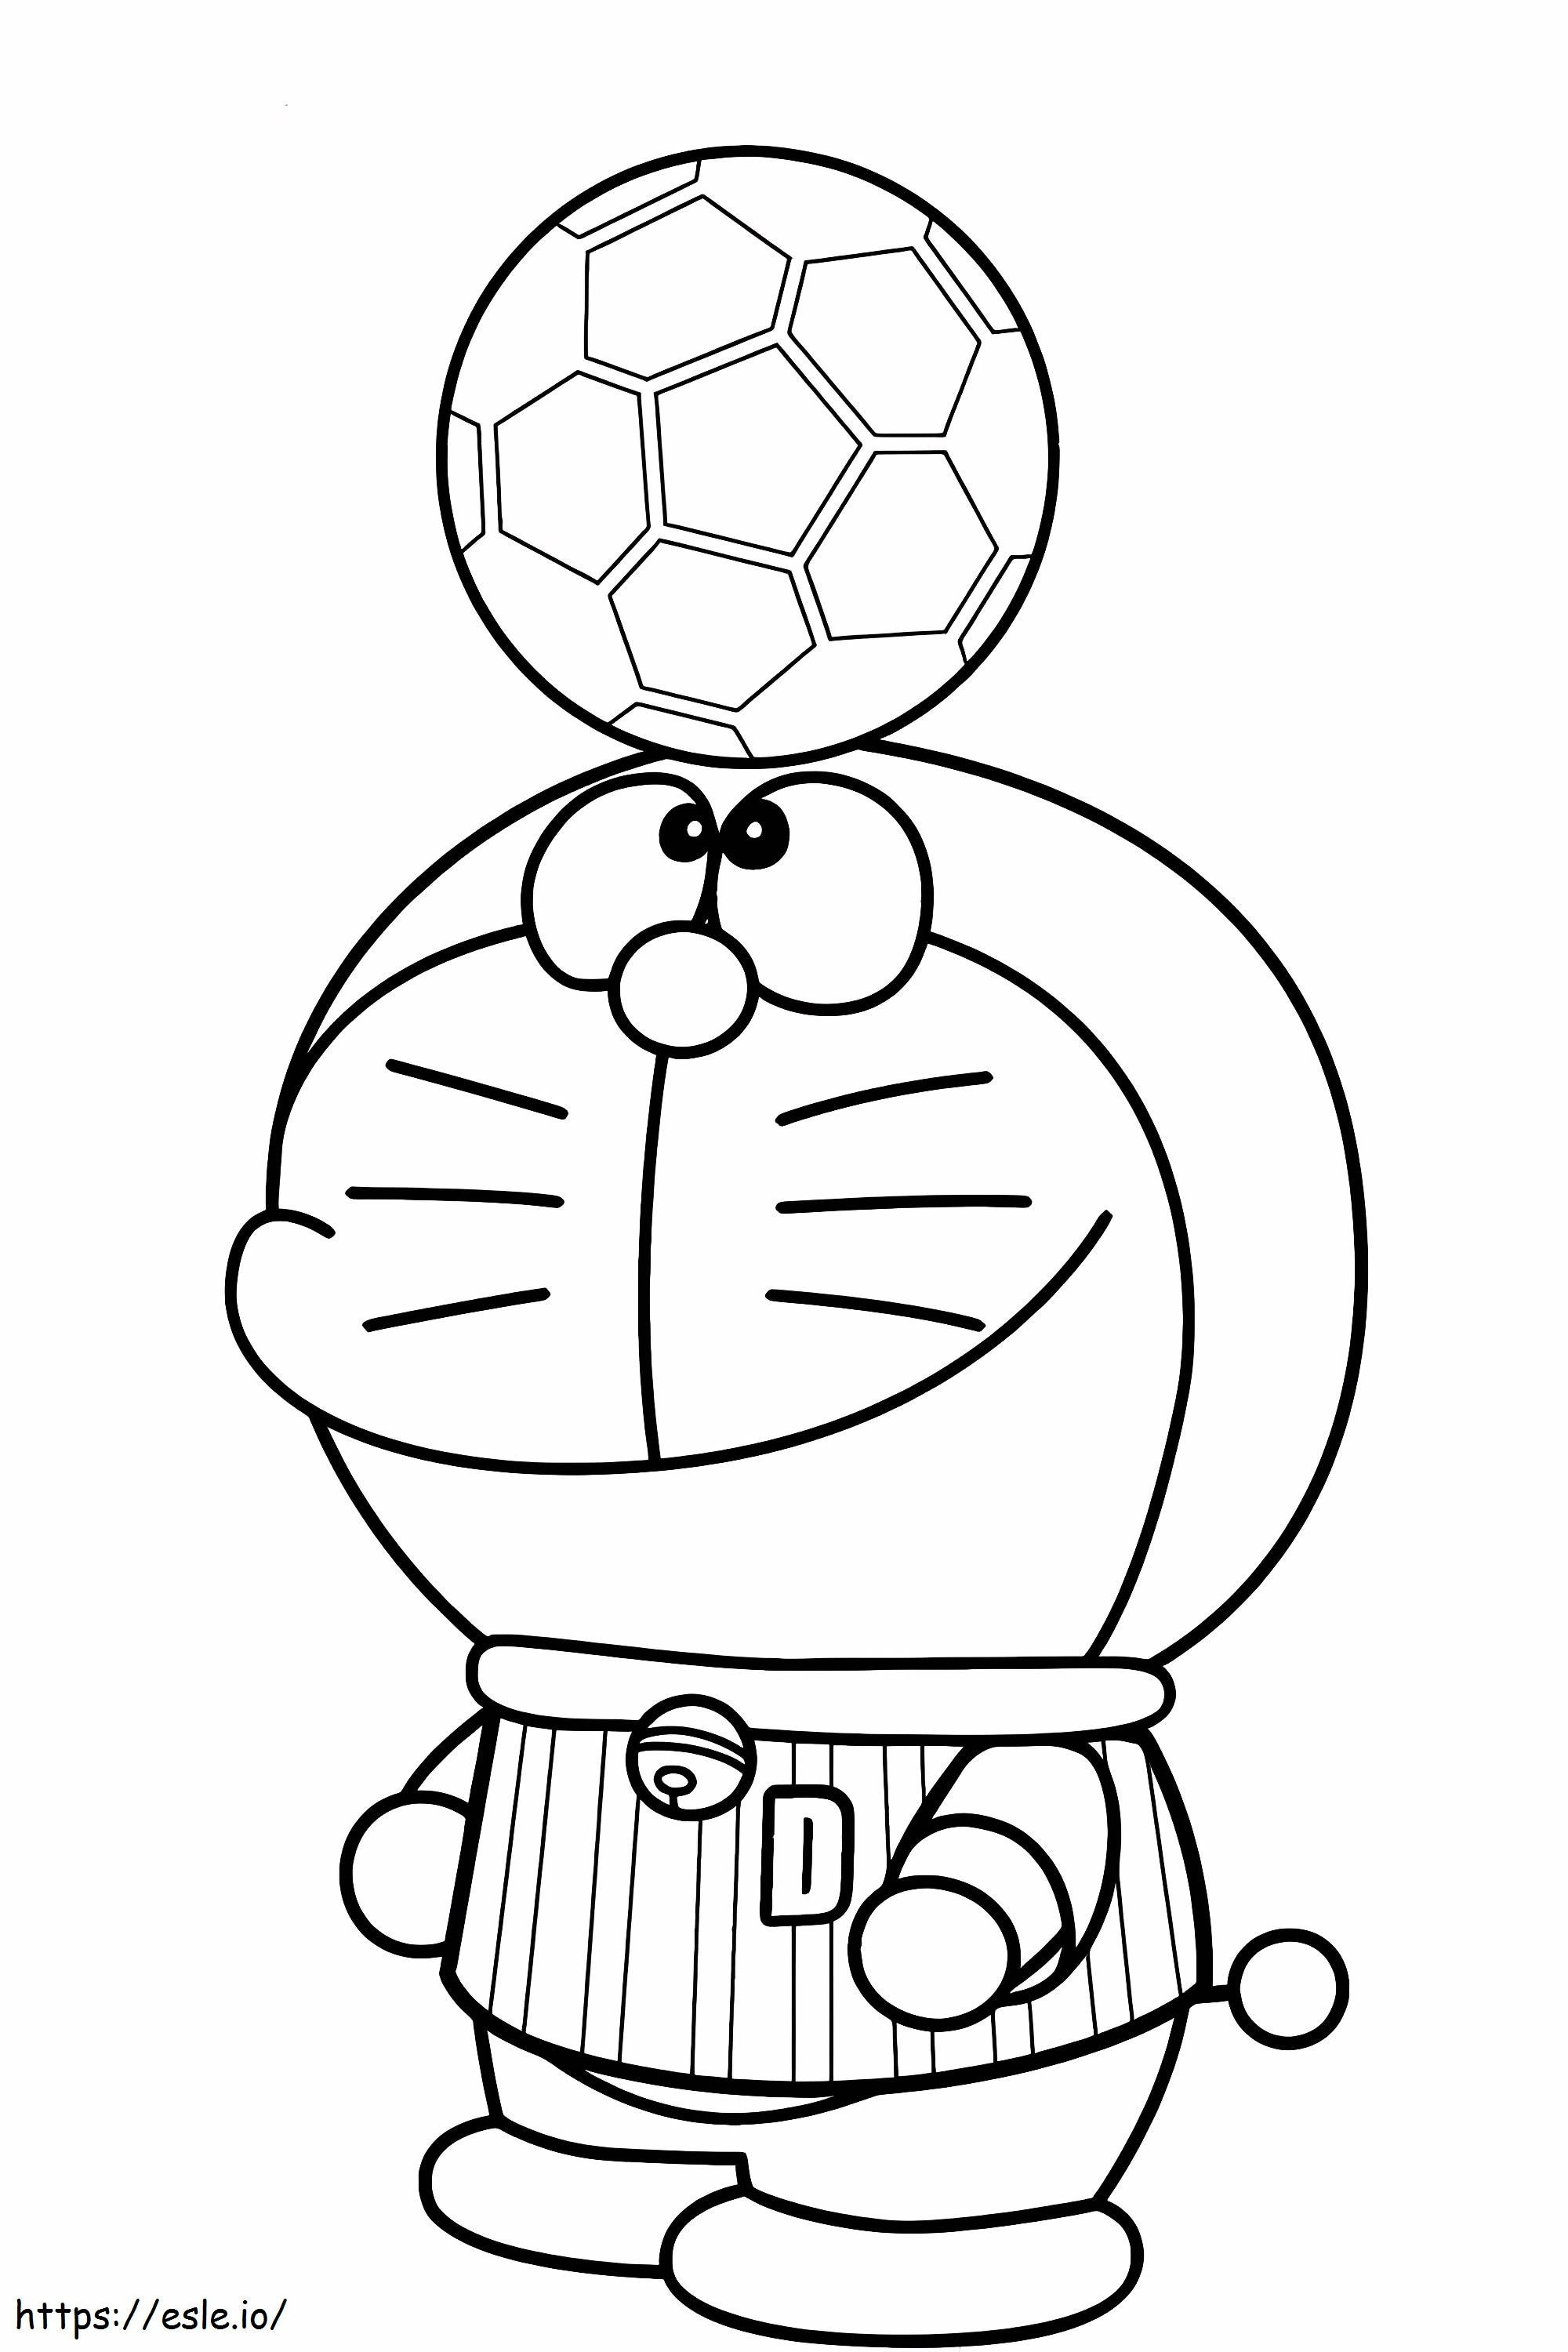 1540782584_I Love Soccer Beautiful Doraemon Coloring Pages Line Magician Doraemon Of I Love Soccer de colorat